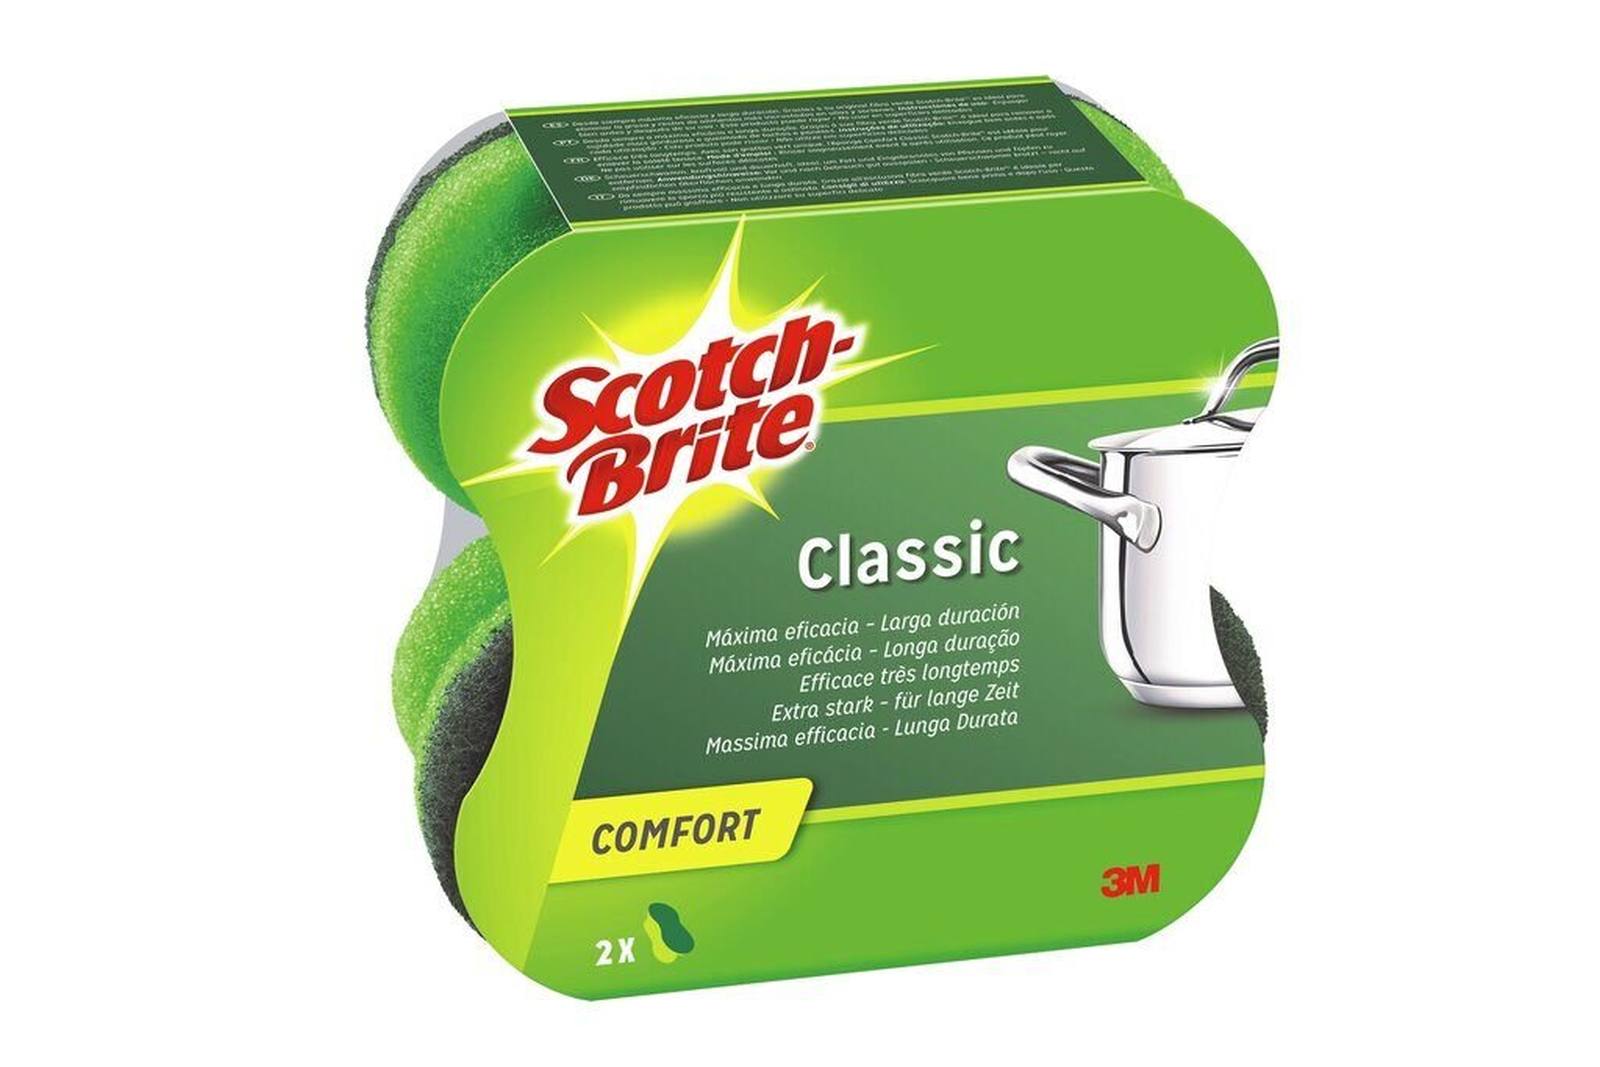 3M Scotch-Brite Classic comfort reinigingsspons extra sterk CLCNS2, groen-groen, 2 stuks